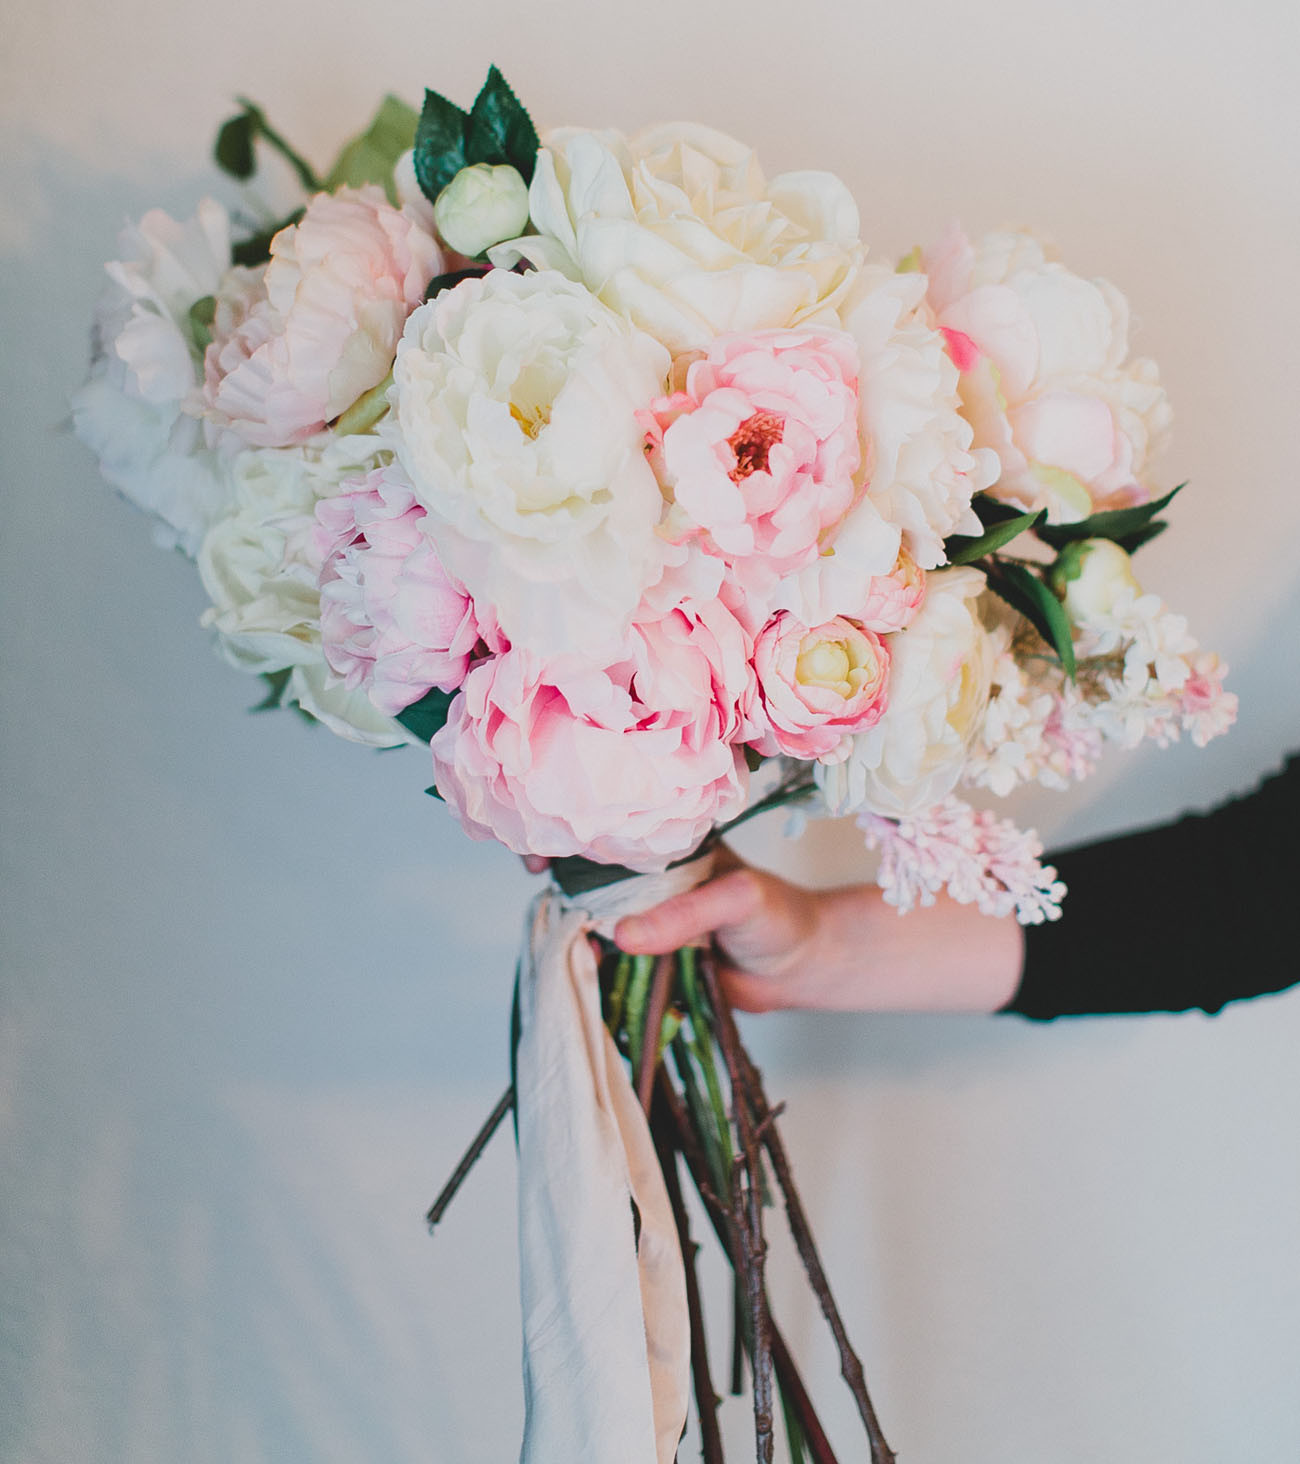 DIY Wedding Bouquet Fake Flowers
 DIY Silk Flower Bouquet with Afloral Green Wedding Shoes